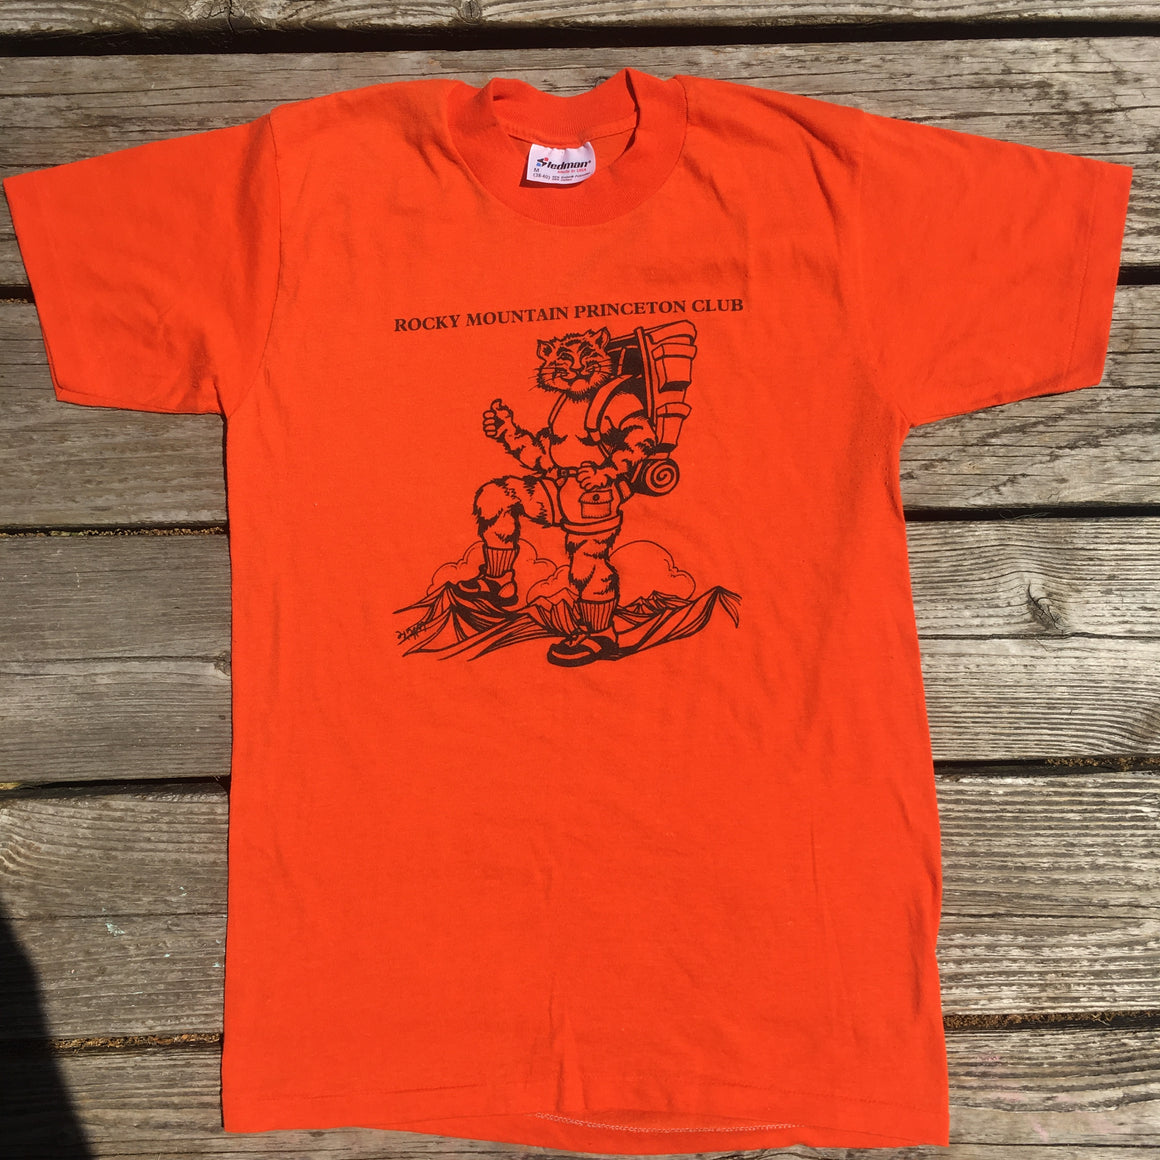 Princeton Tigers vintage shirt - S/M